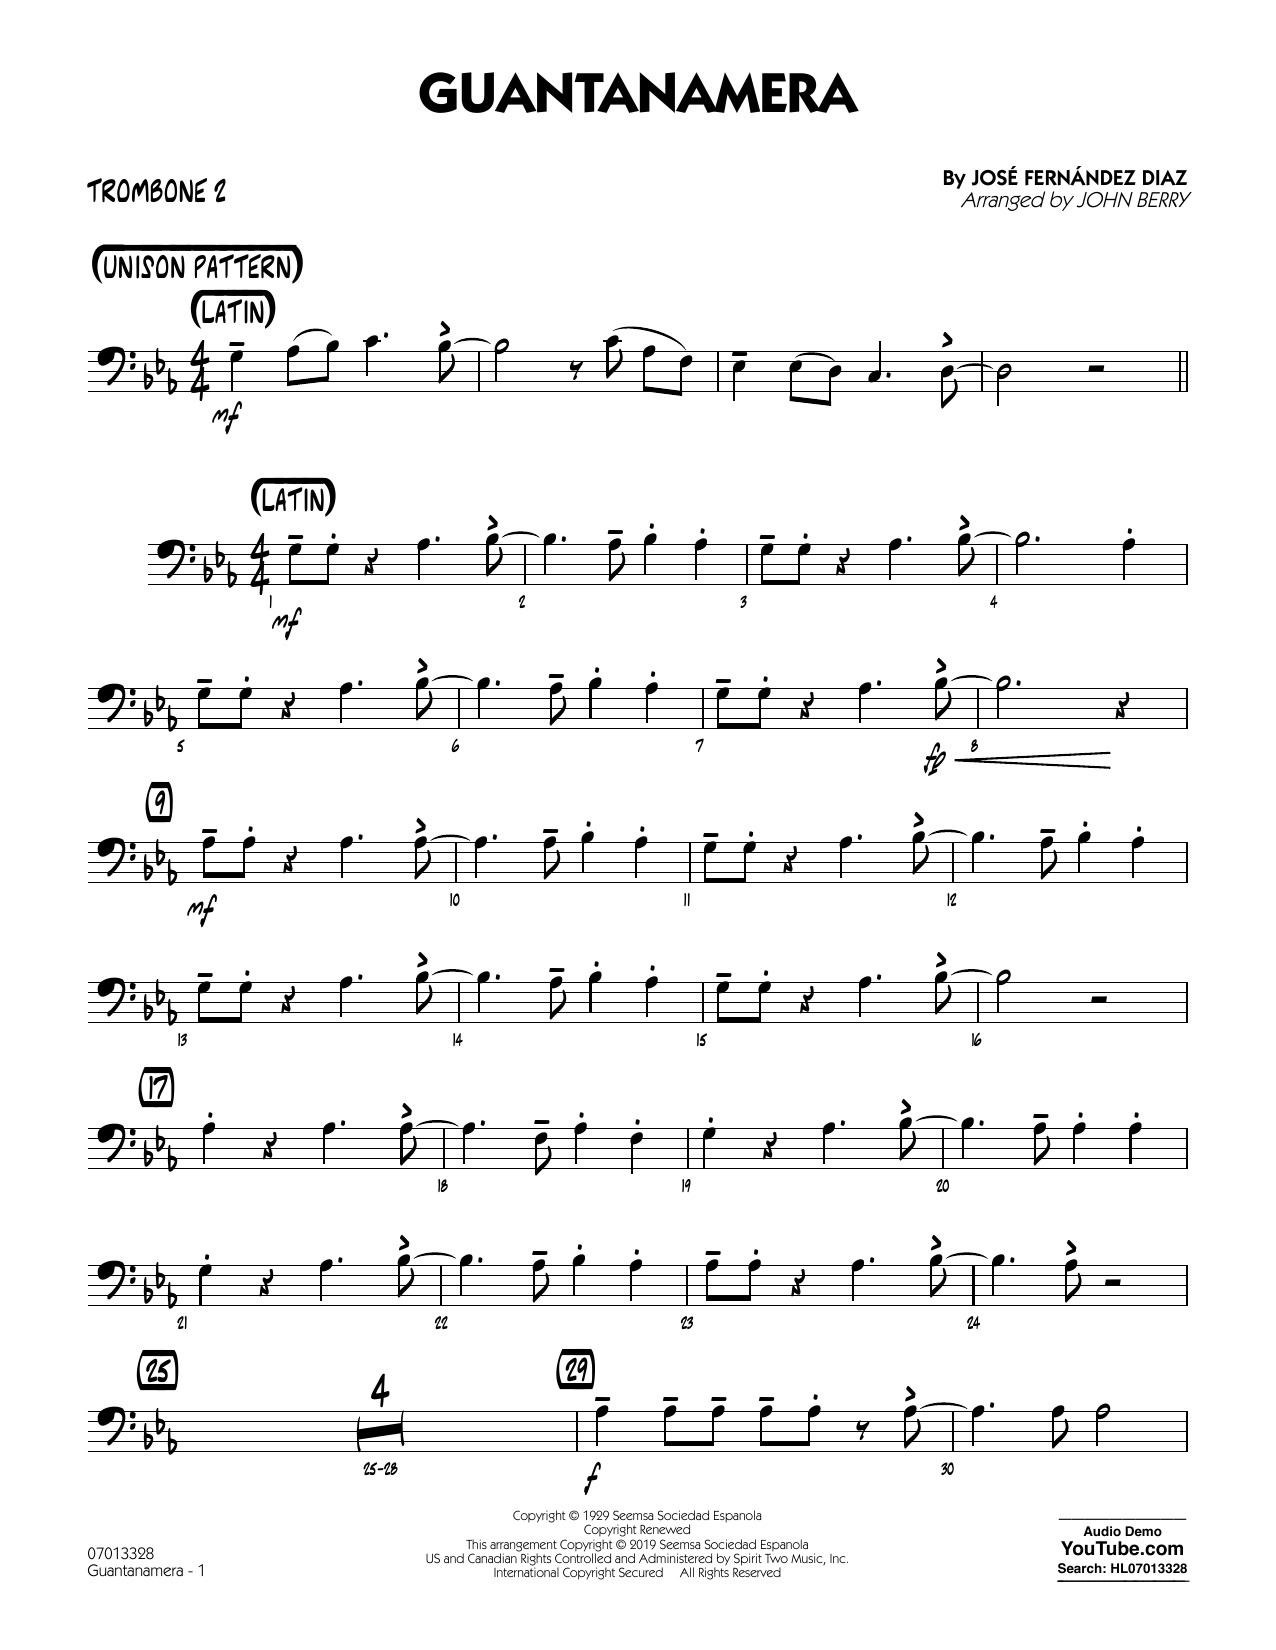 José Fernández Diaz Guantanamera (arr. John Berry) - Trombone 2 Sheet Music Notes & Chords for Jazz Ensemble - Download or Print PDF